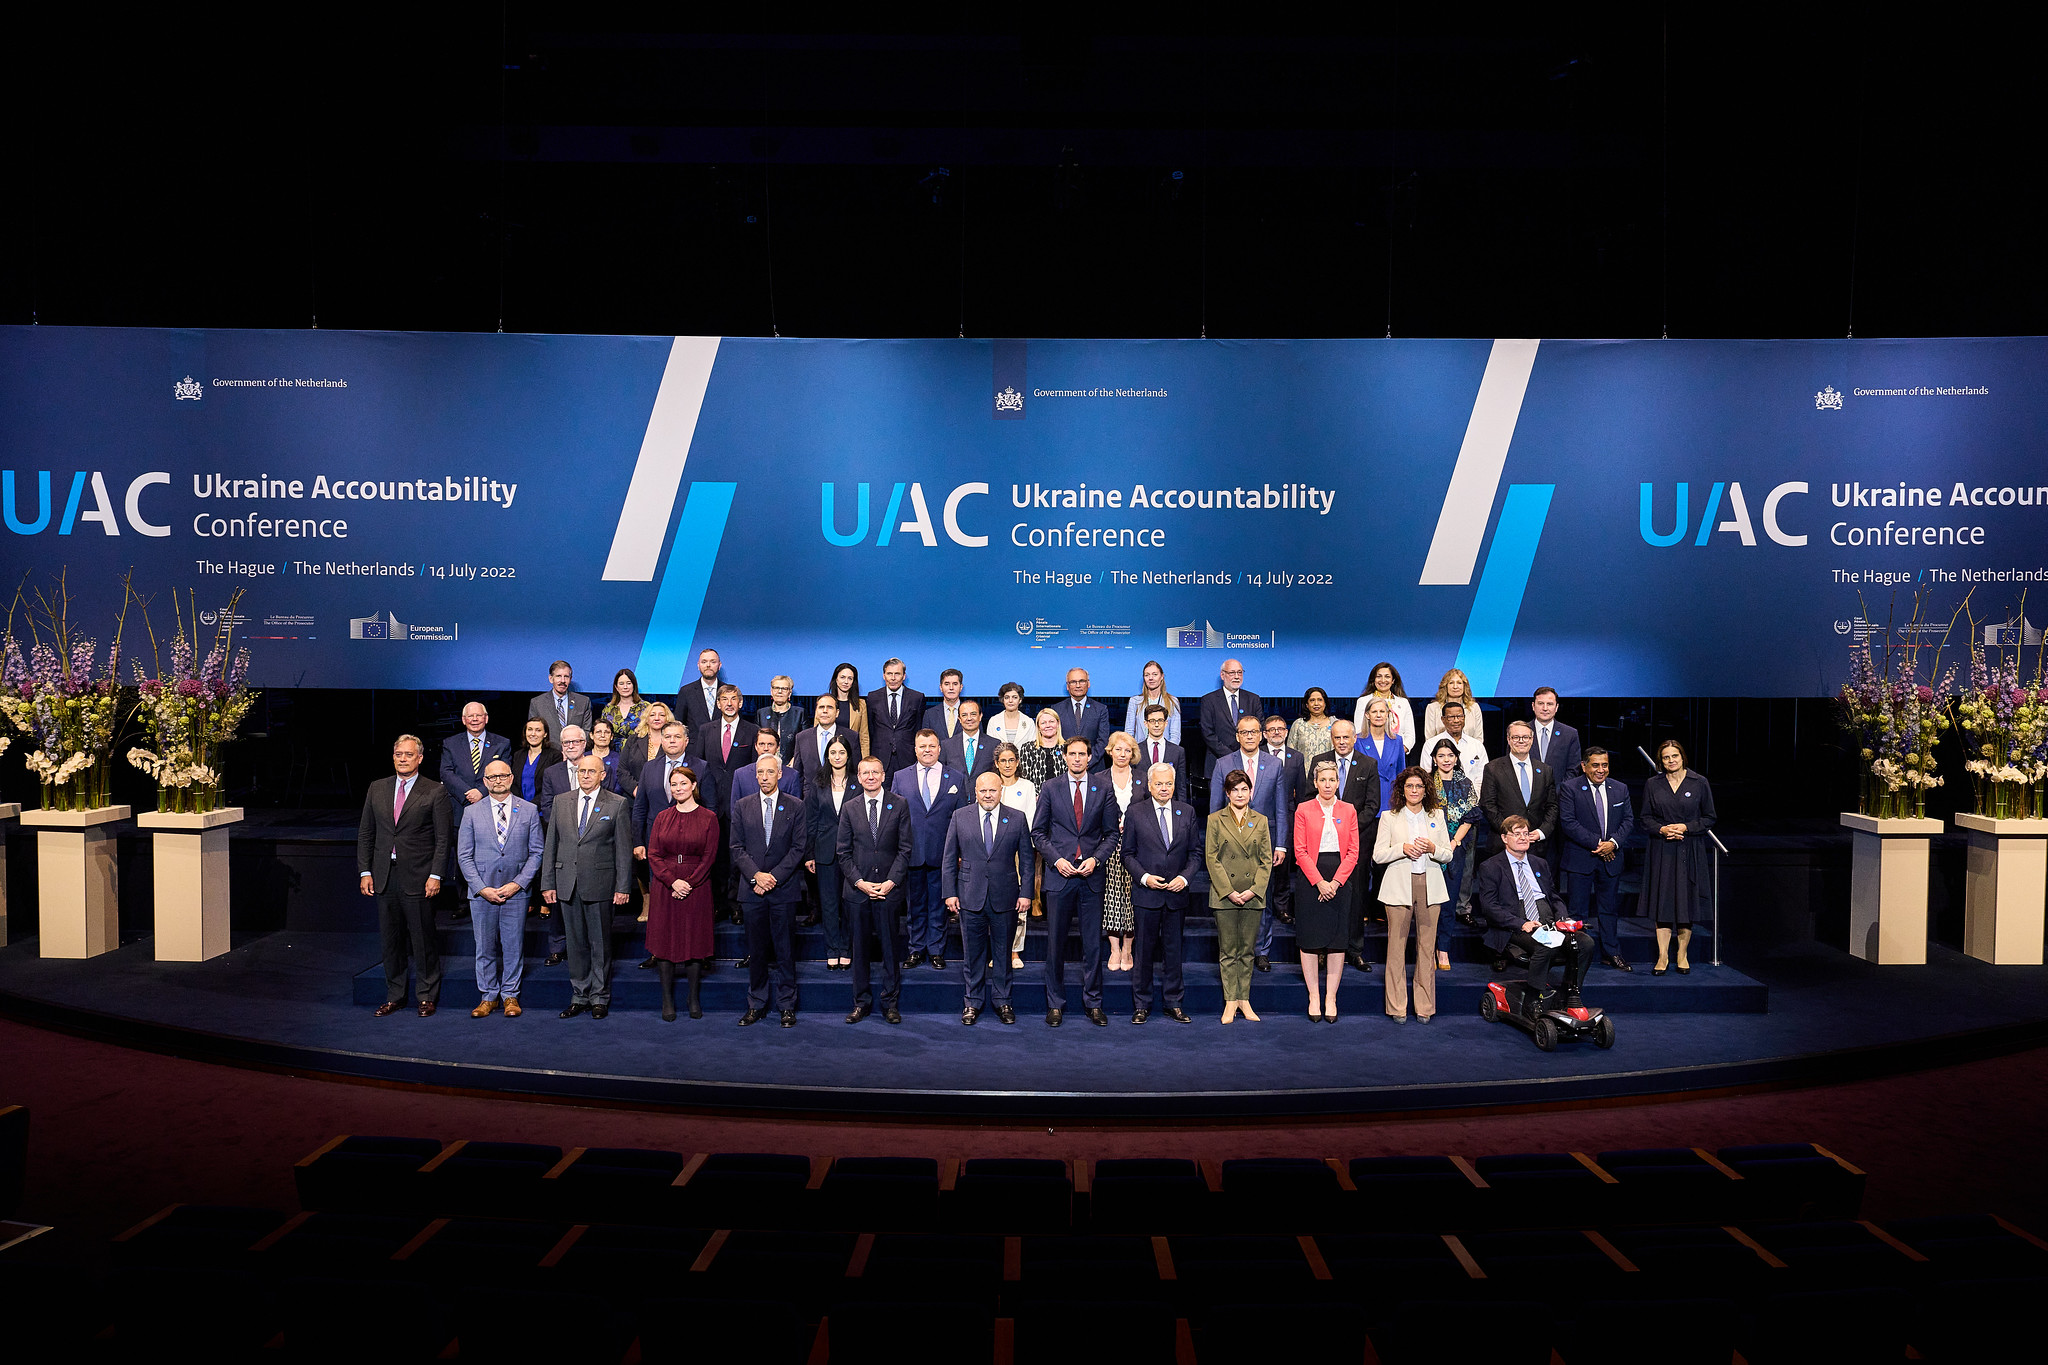 Ukraine Accountability Conference group photo 